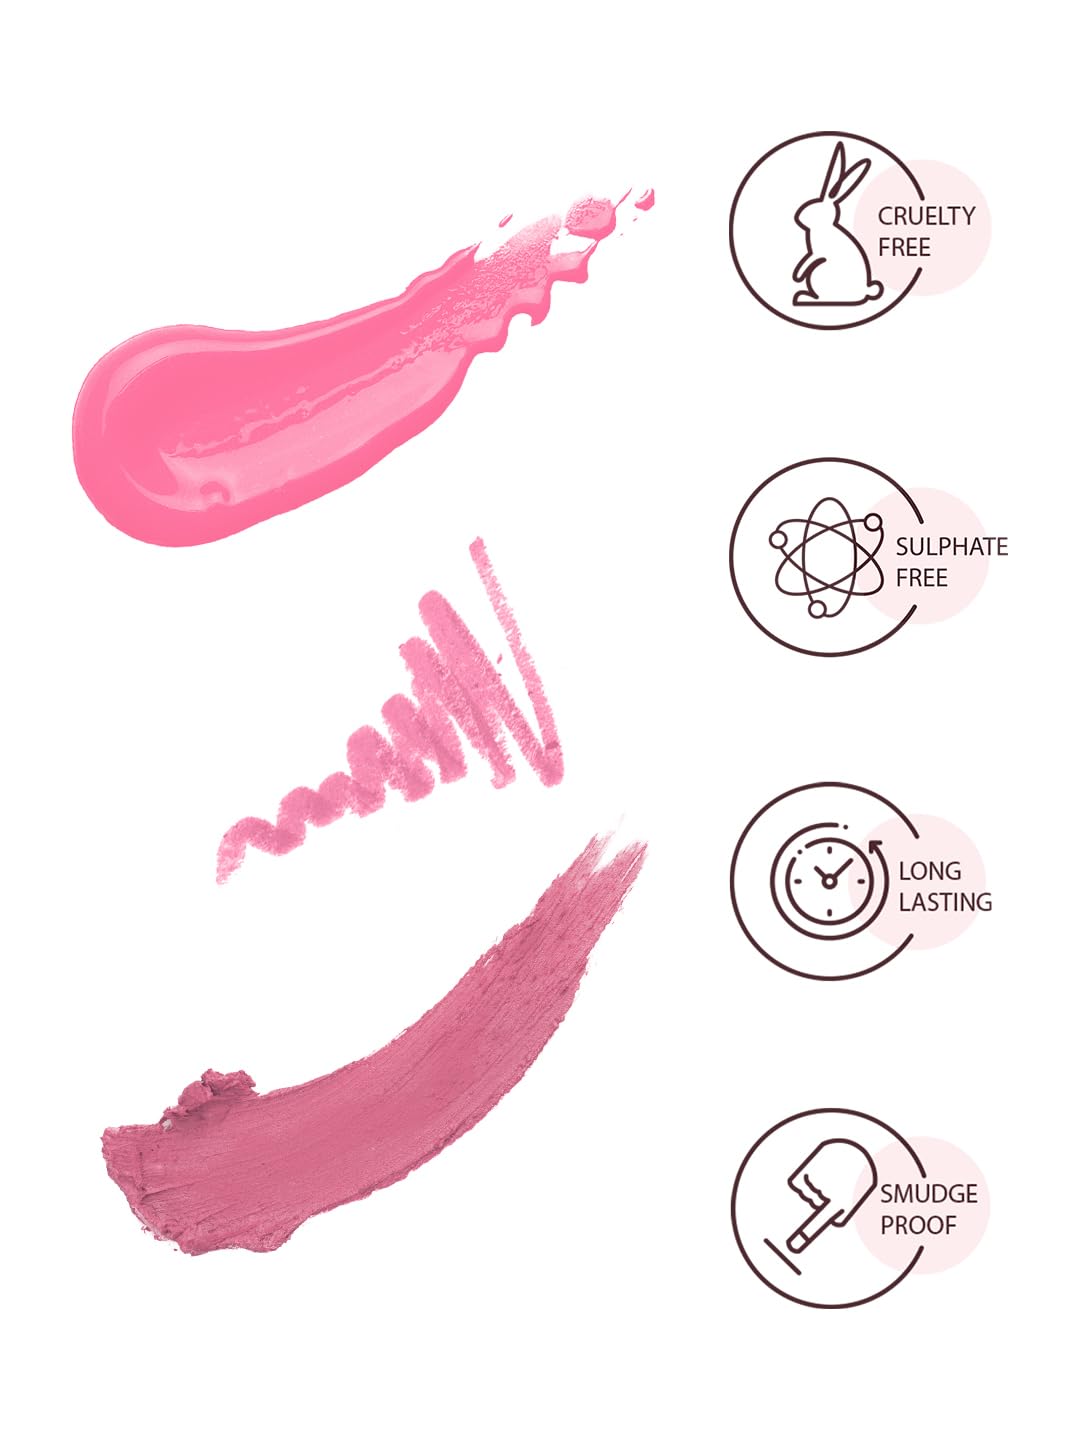 STARSTRUCK BY SUNNY LEONE New Shades of Lipstick + Lip Gloss + Lip Liner Lip Kit (3PC Lip Kit) (Pink Peony)